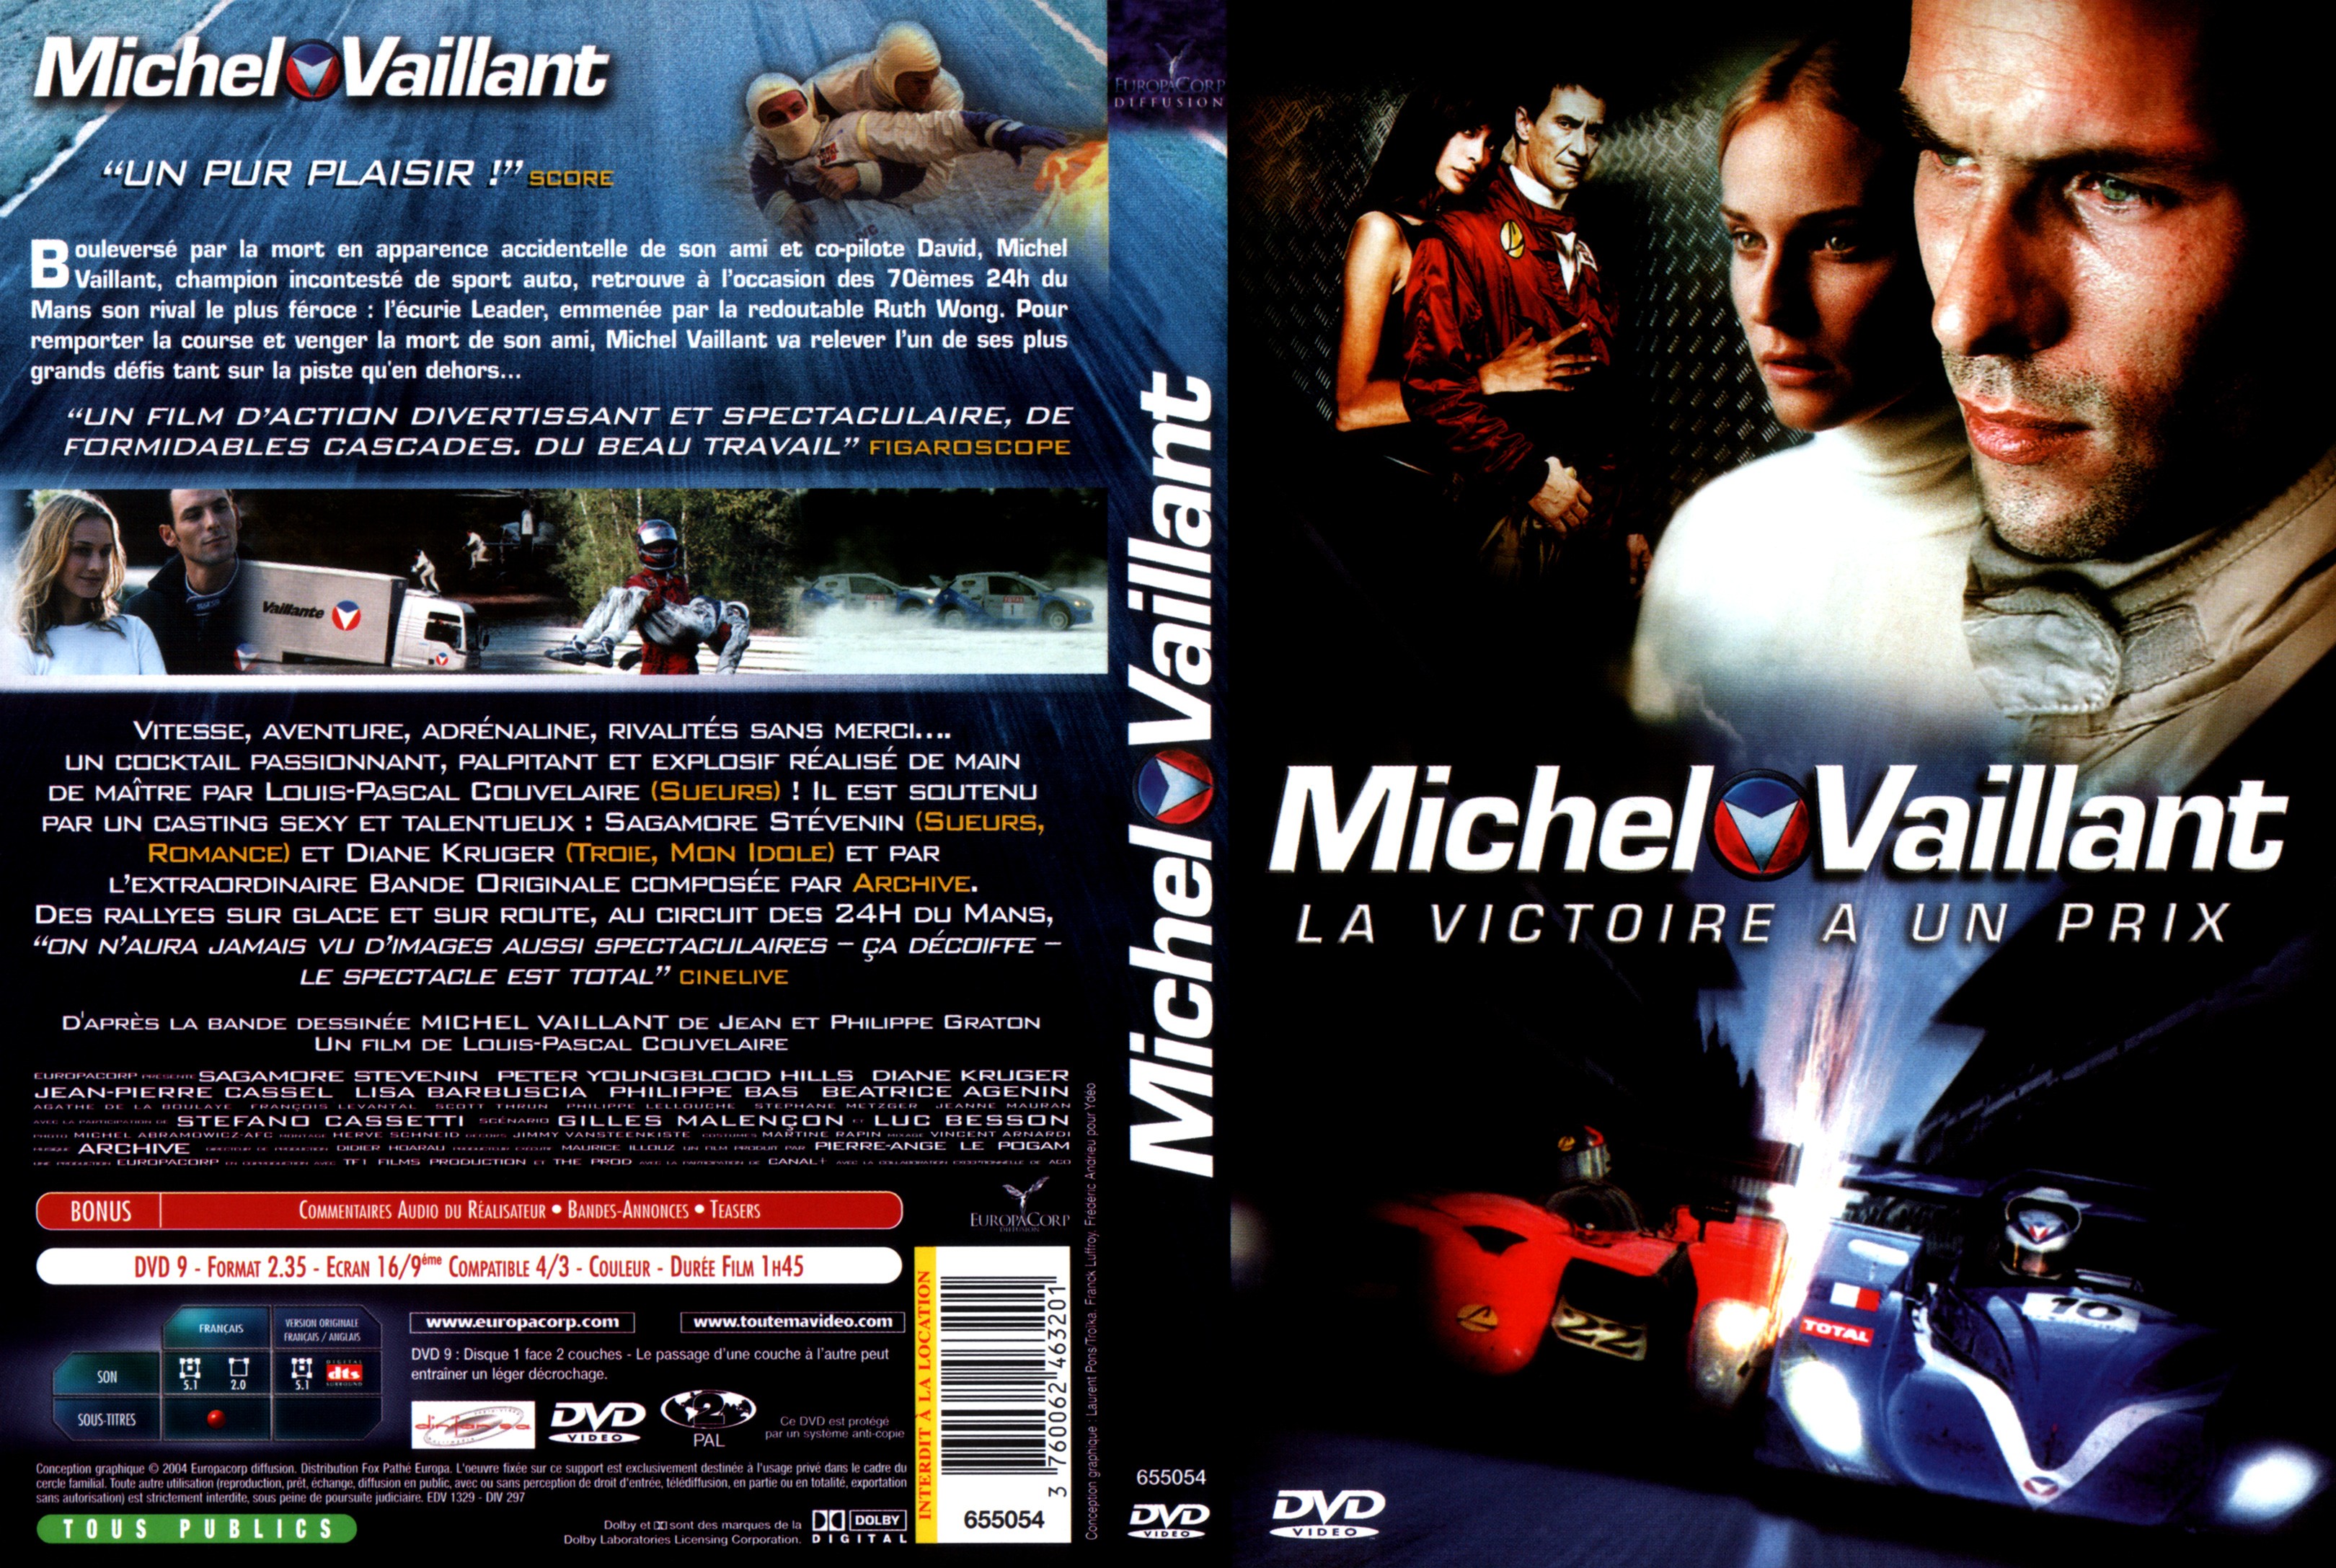 Jaquette DVD Michel Vaillant v2